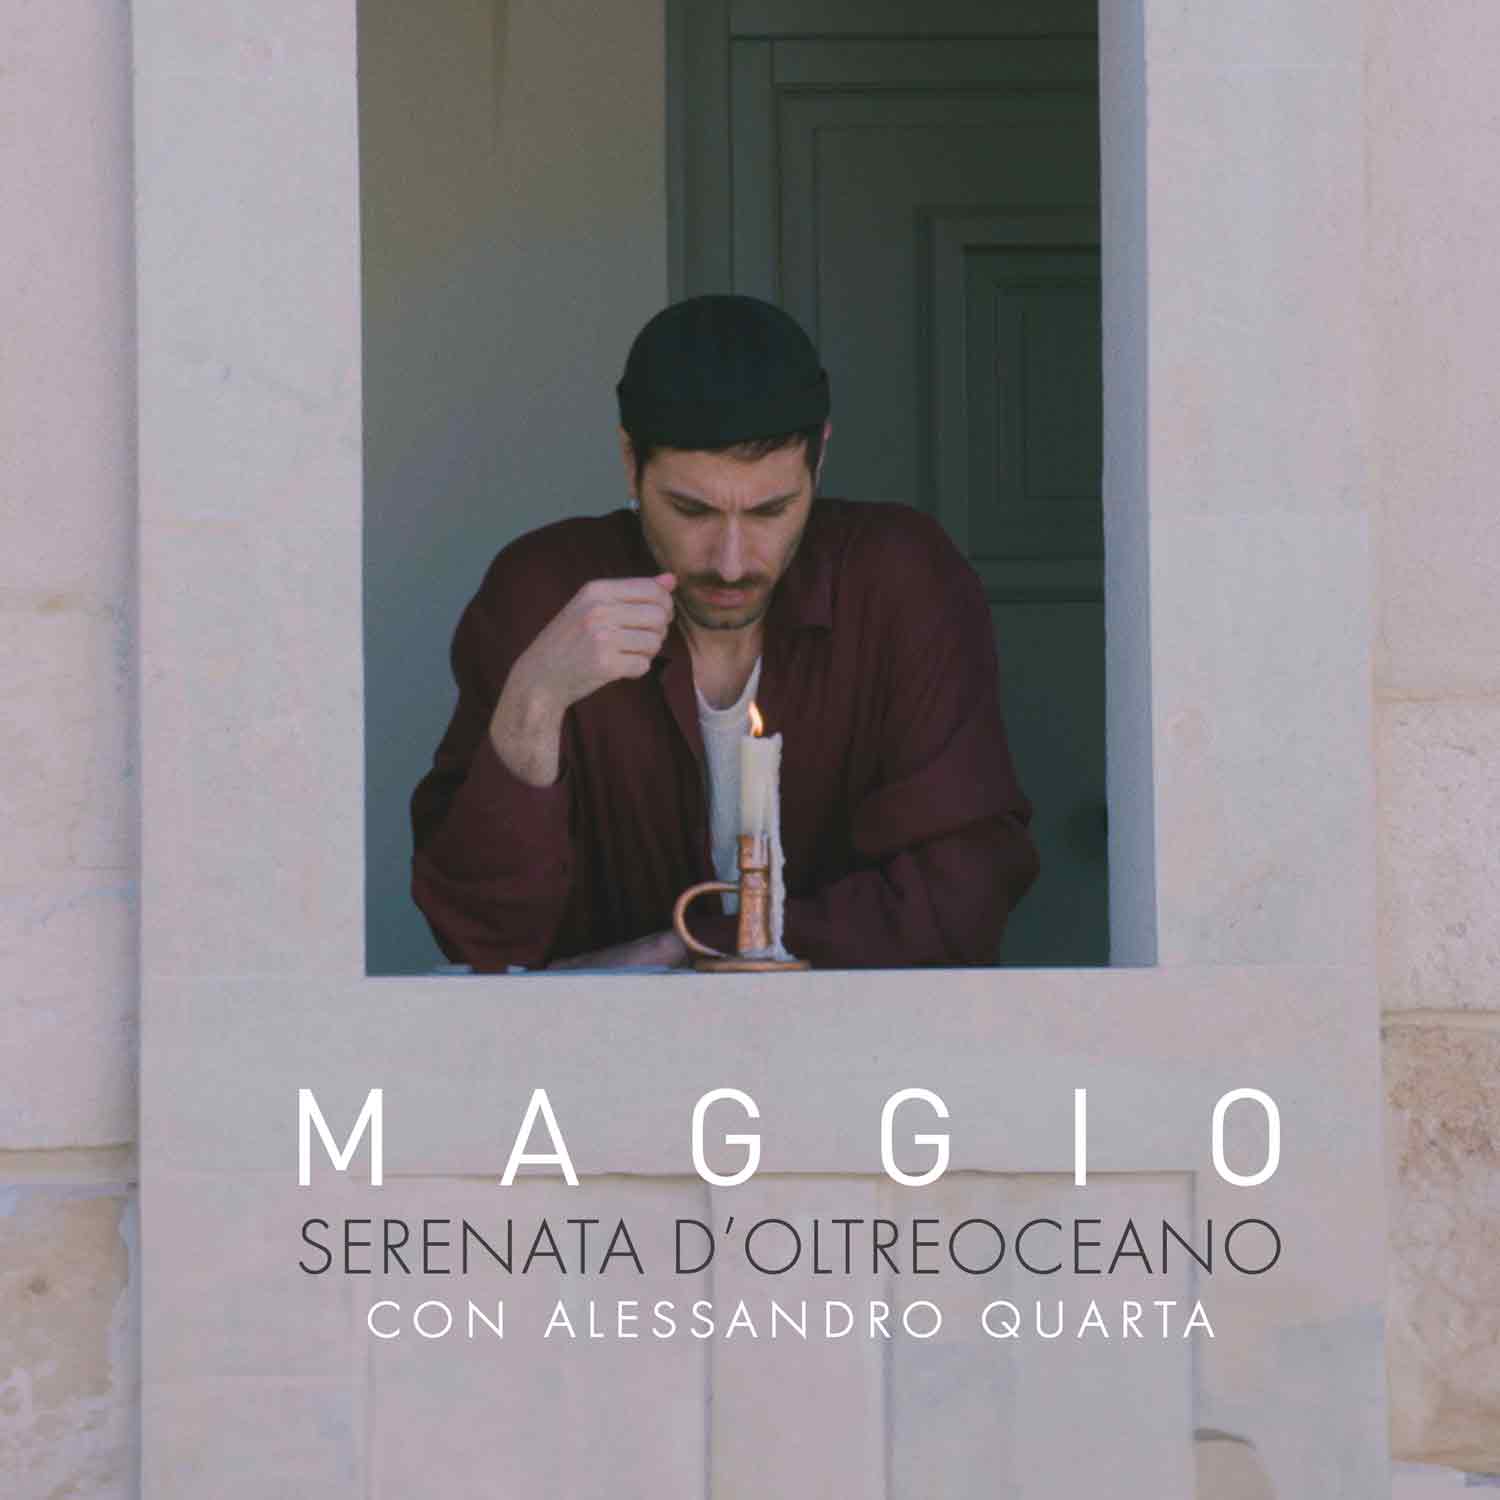 Antonio Maggio